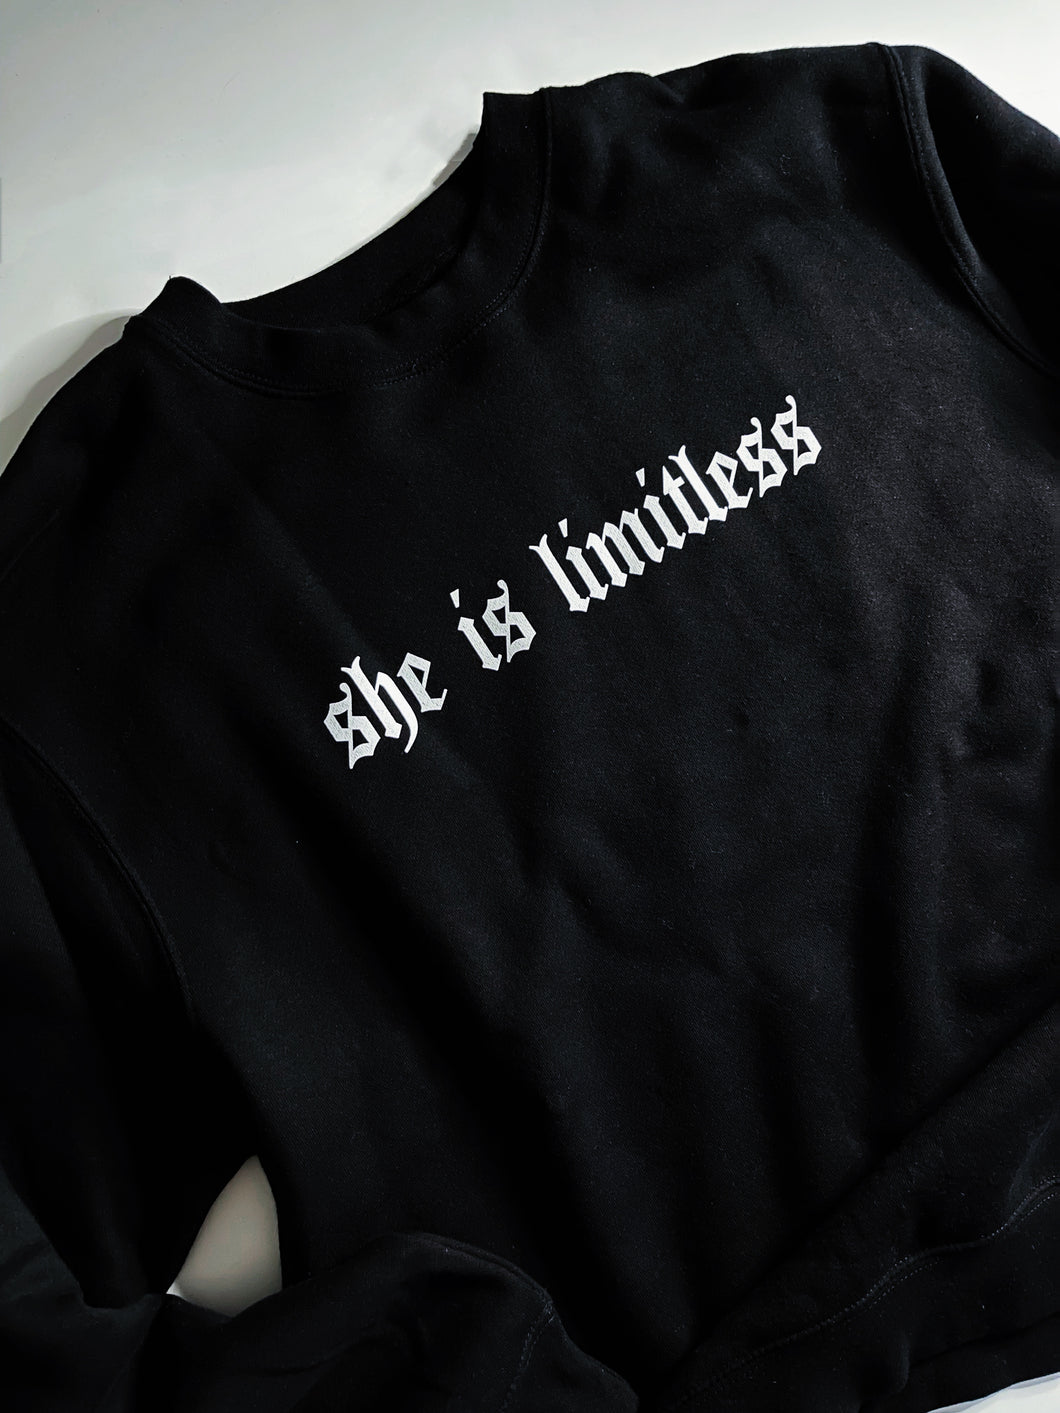 She is limitless black sweatshirt